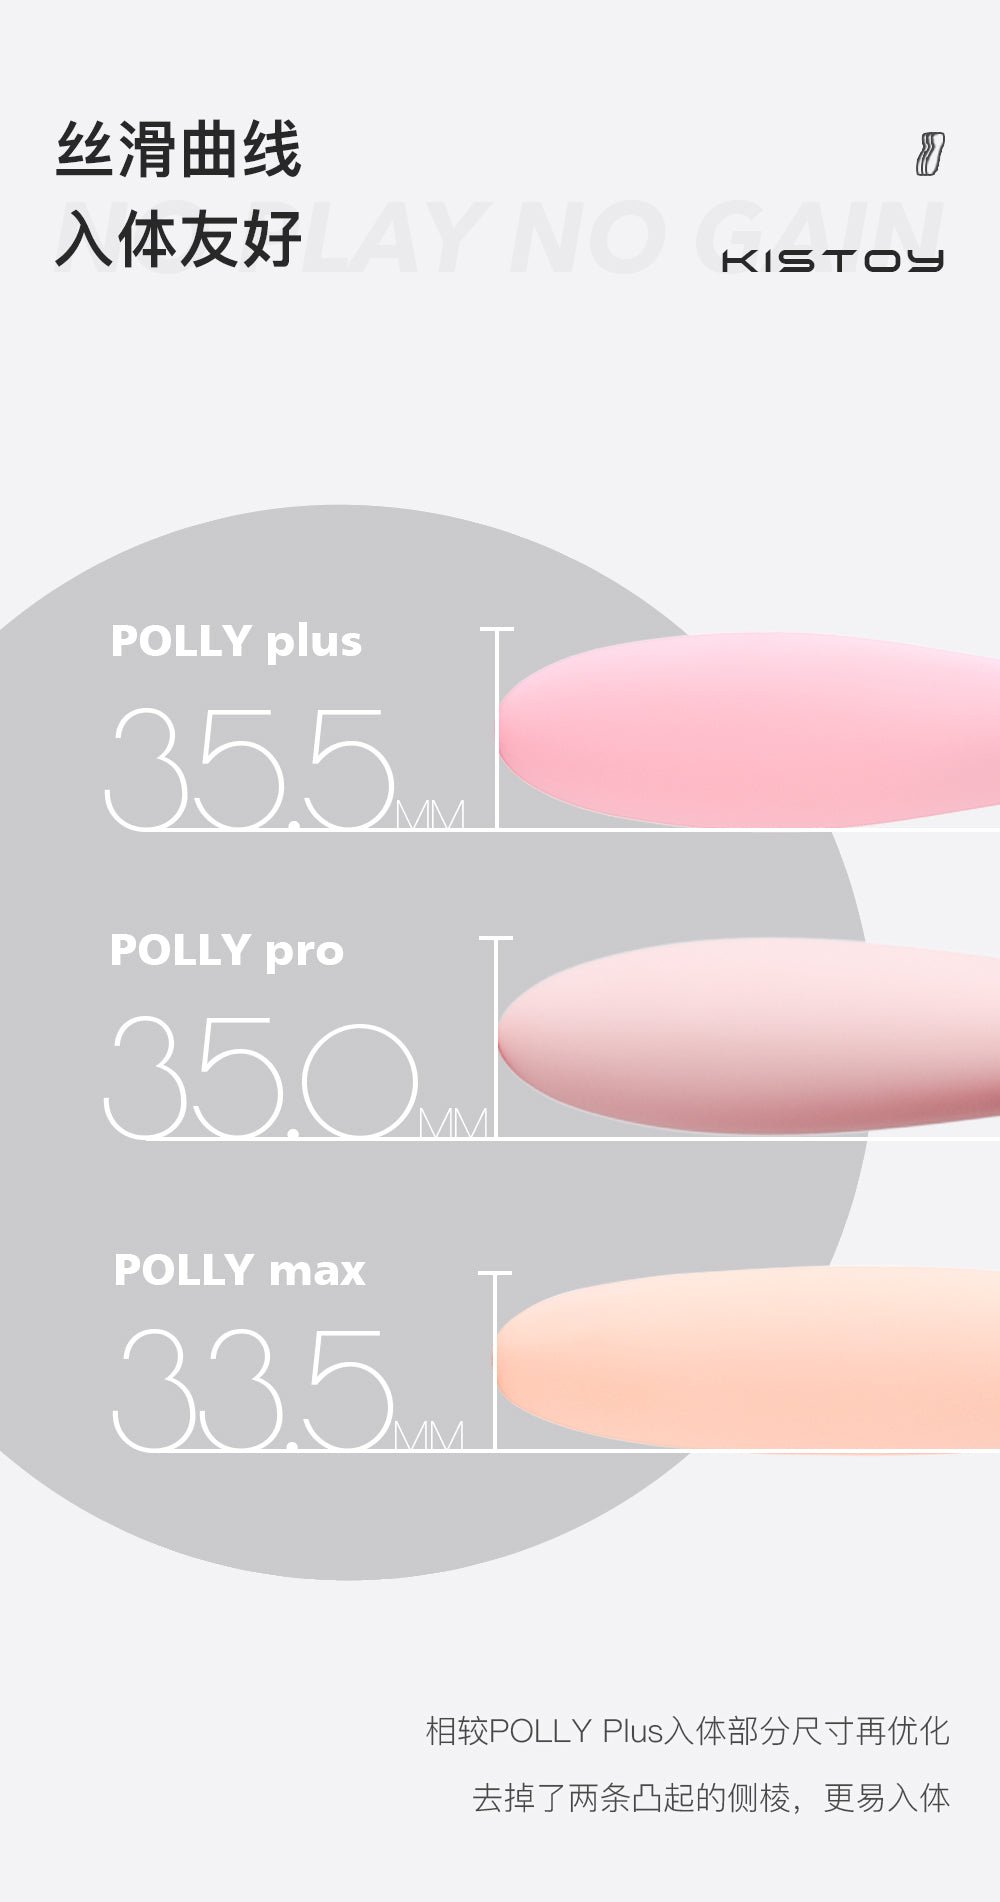 KISTOY Polly Pro APP Control Whisper Clitoral Suction Stimulator - lovemesexClitoral Suction Vibrators